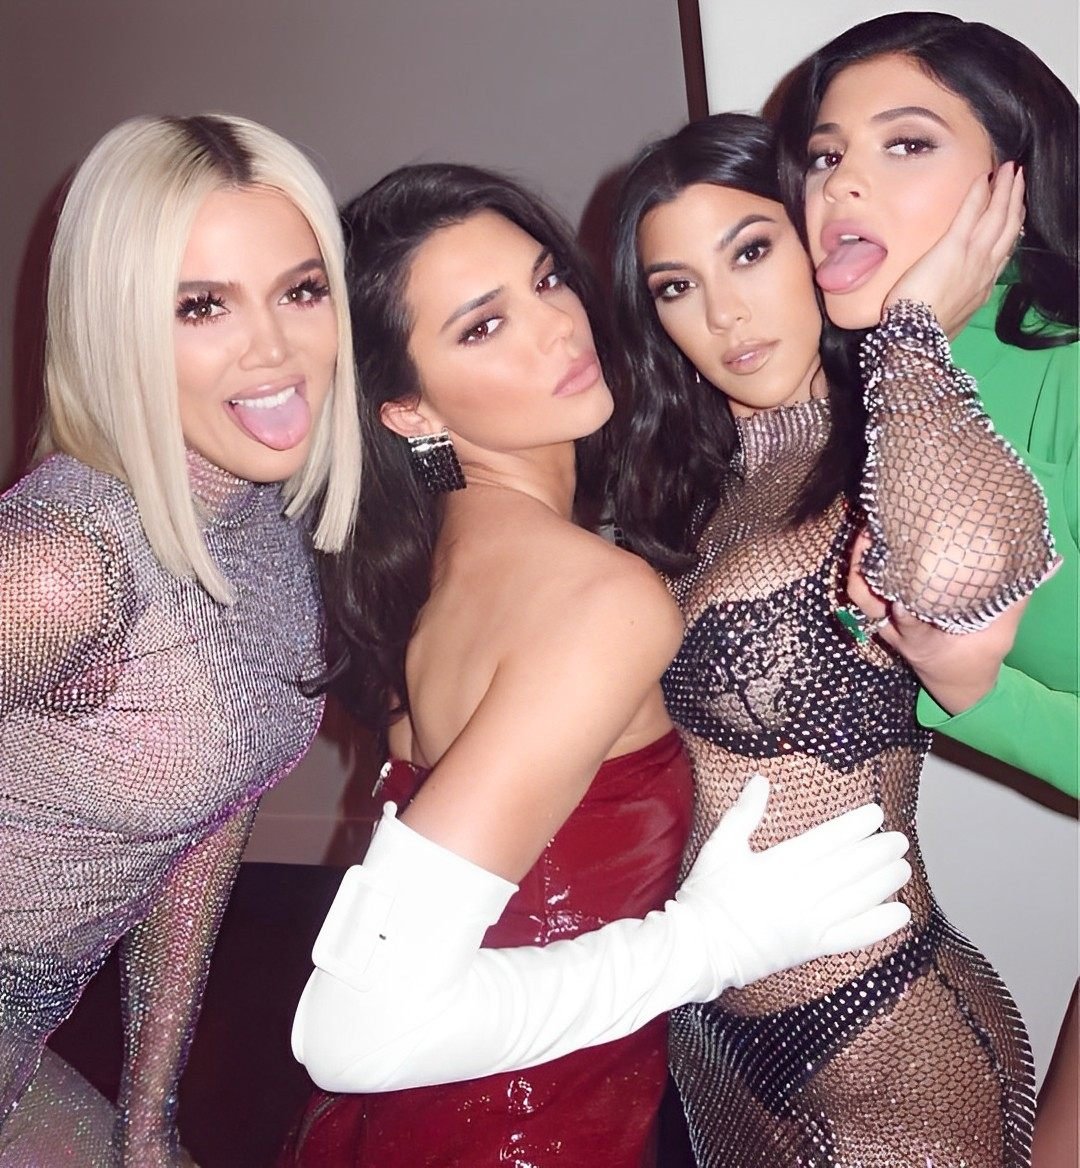 Khloé Kardashian, Kendall Jenner, Kourtney Kardashian and Kylie Jenner are all part of the most famous reality TV family on the planet. Photos: @kardashians/Instagram